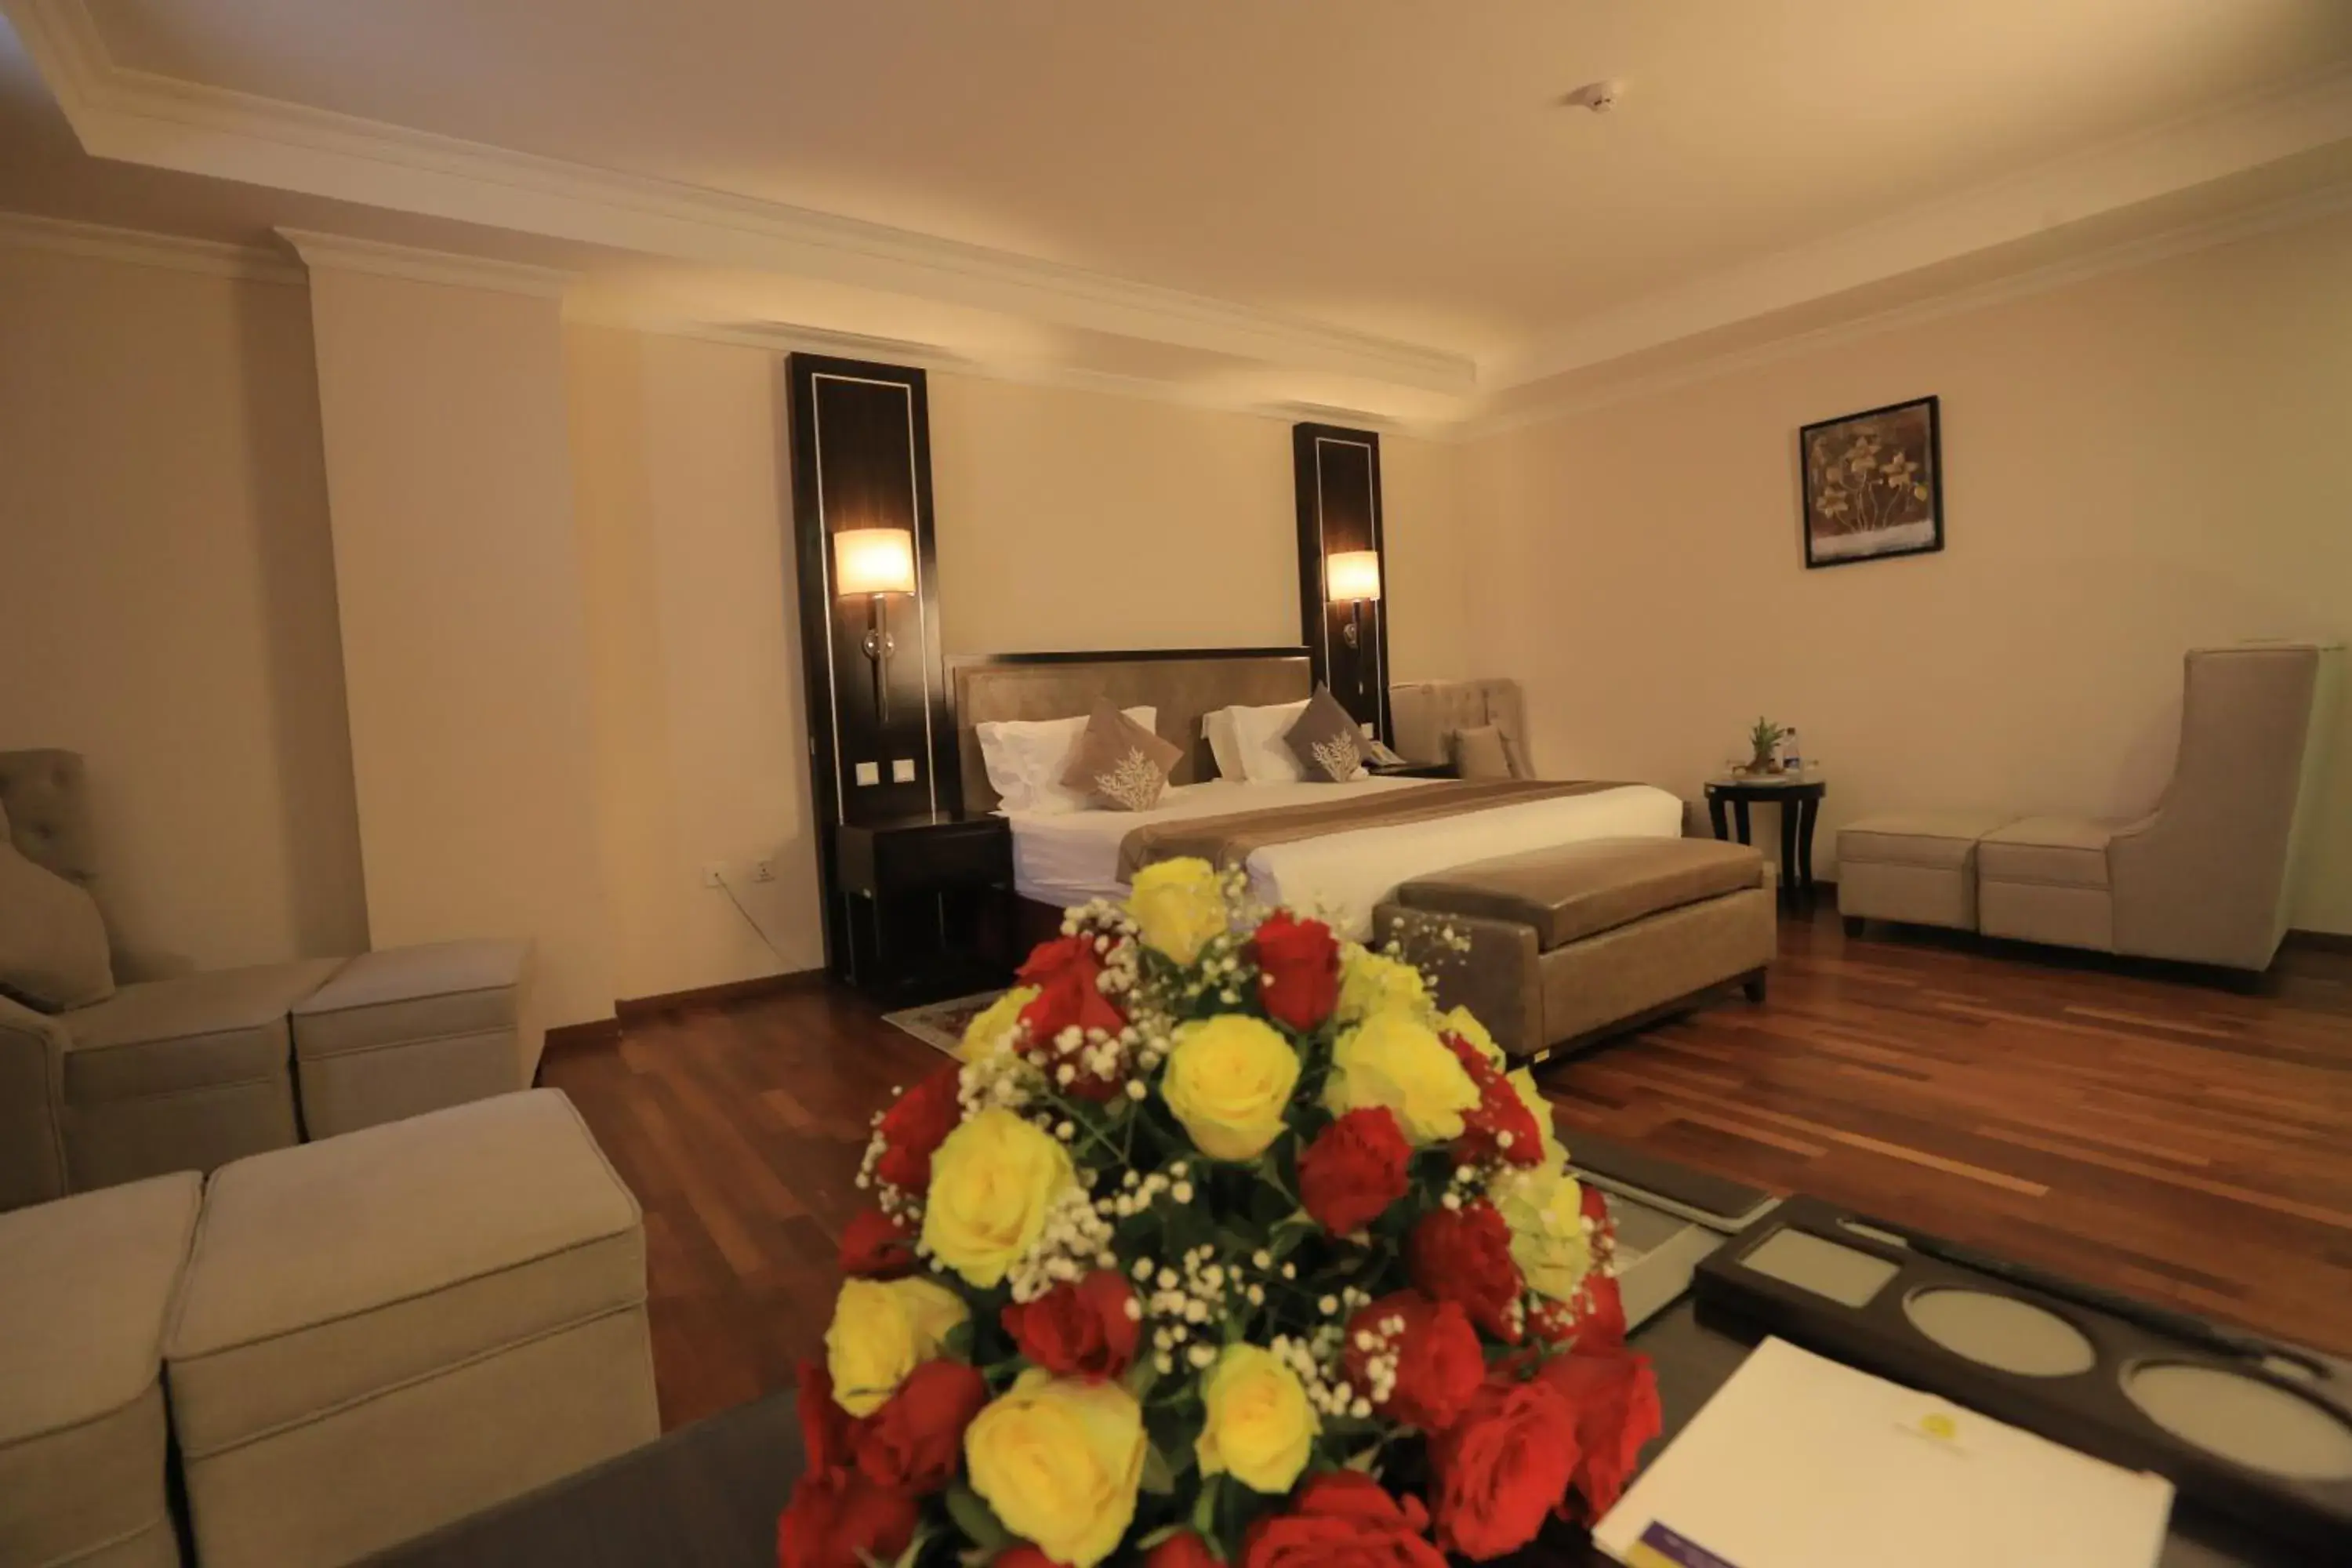 Bed, Room Photo in Saro-Maria Hotel